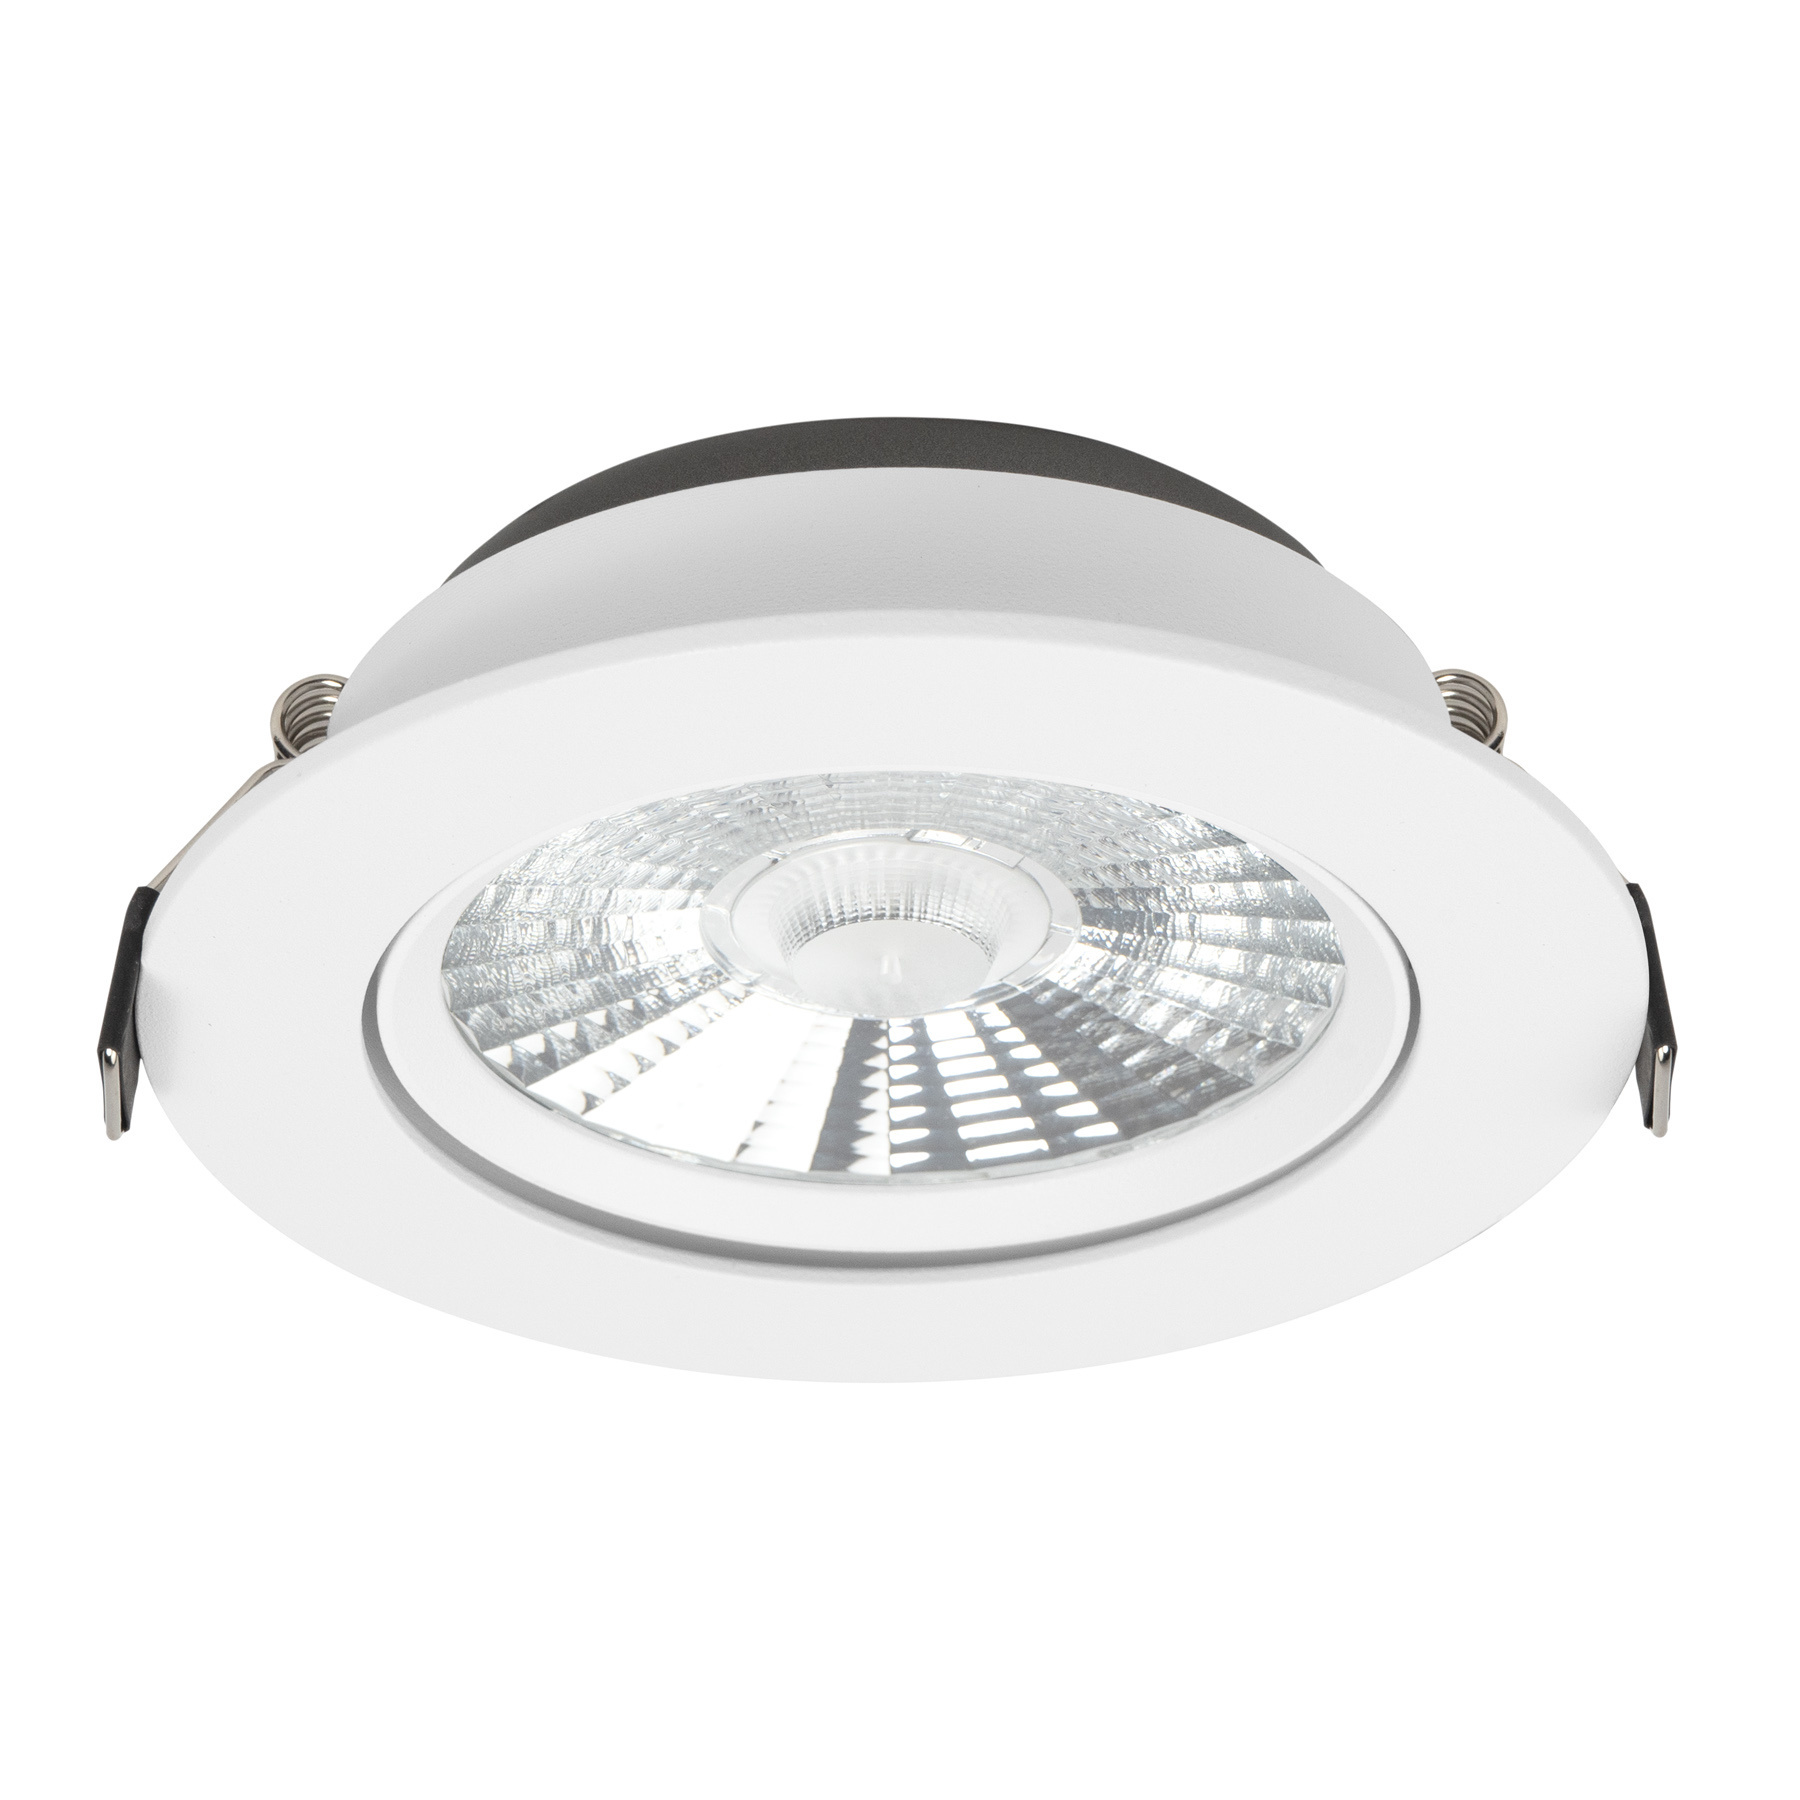 Spot fixe de 24 LED 12V encastrable - Blanc - Abri Services